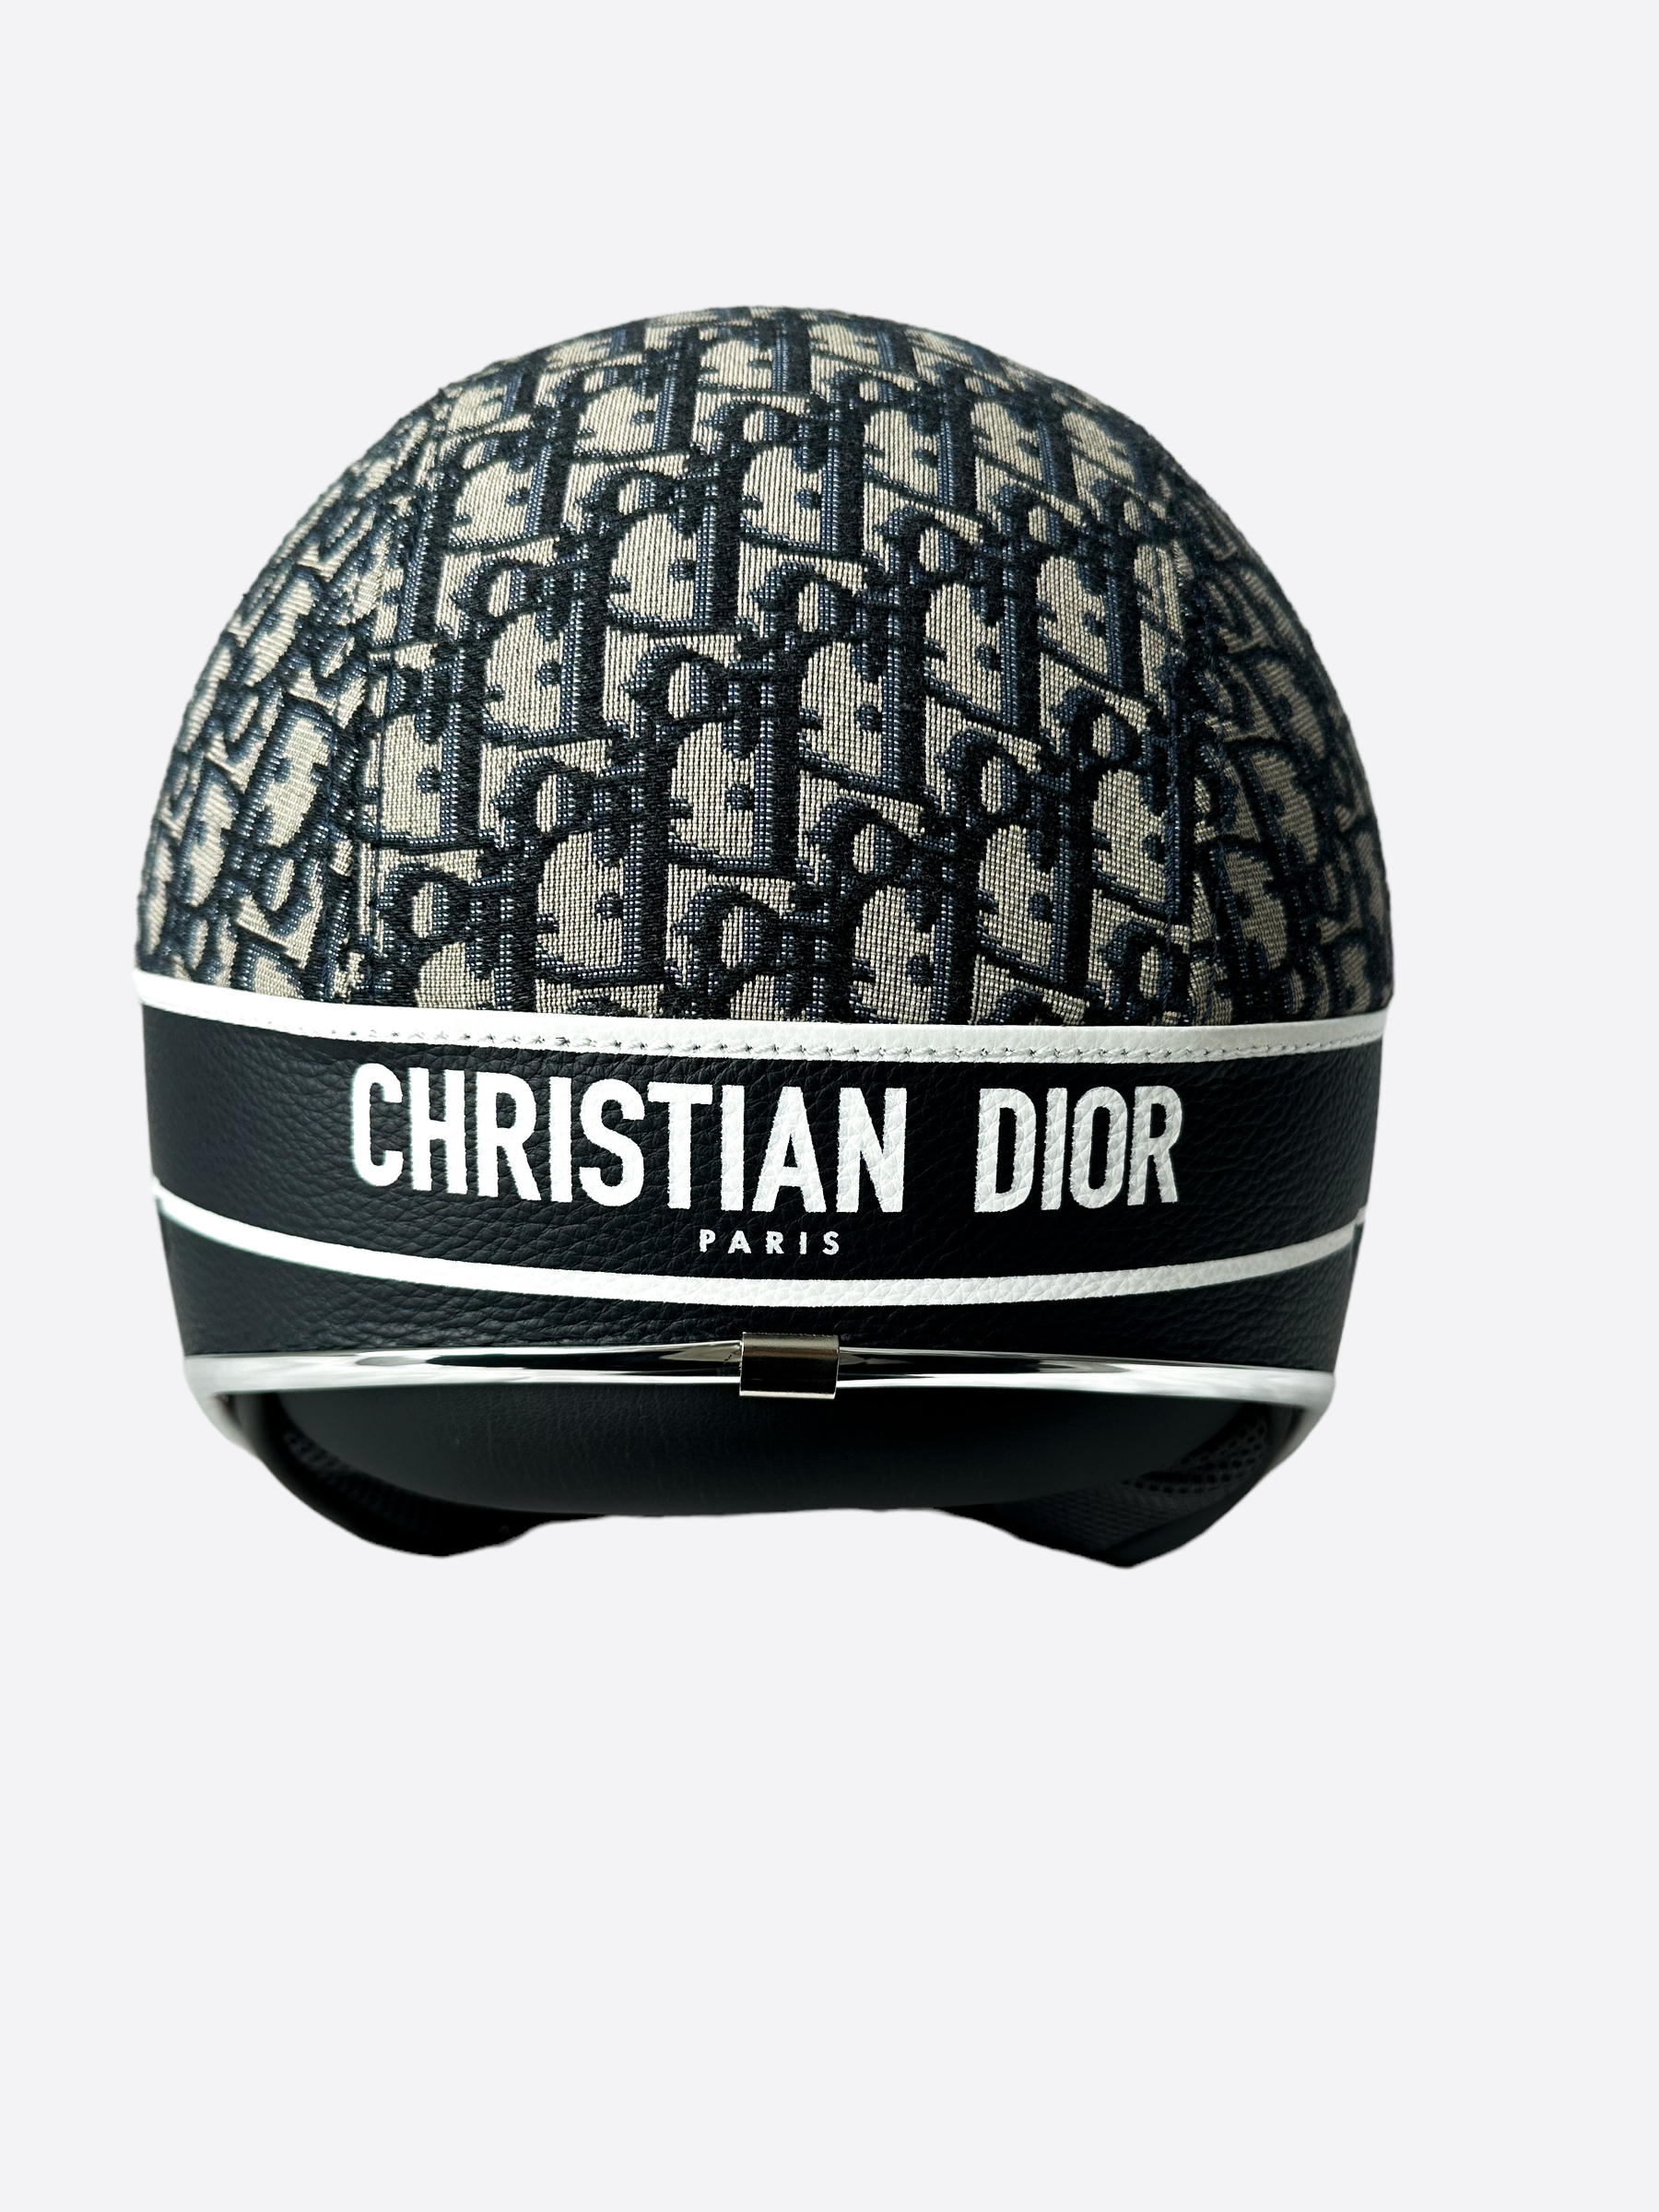 Christian Dior 946 just arrived at the shop. : r/Vespa